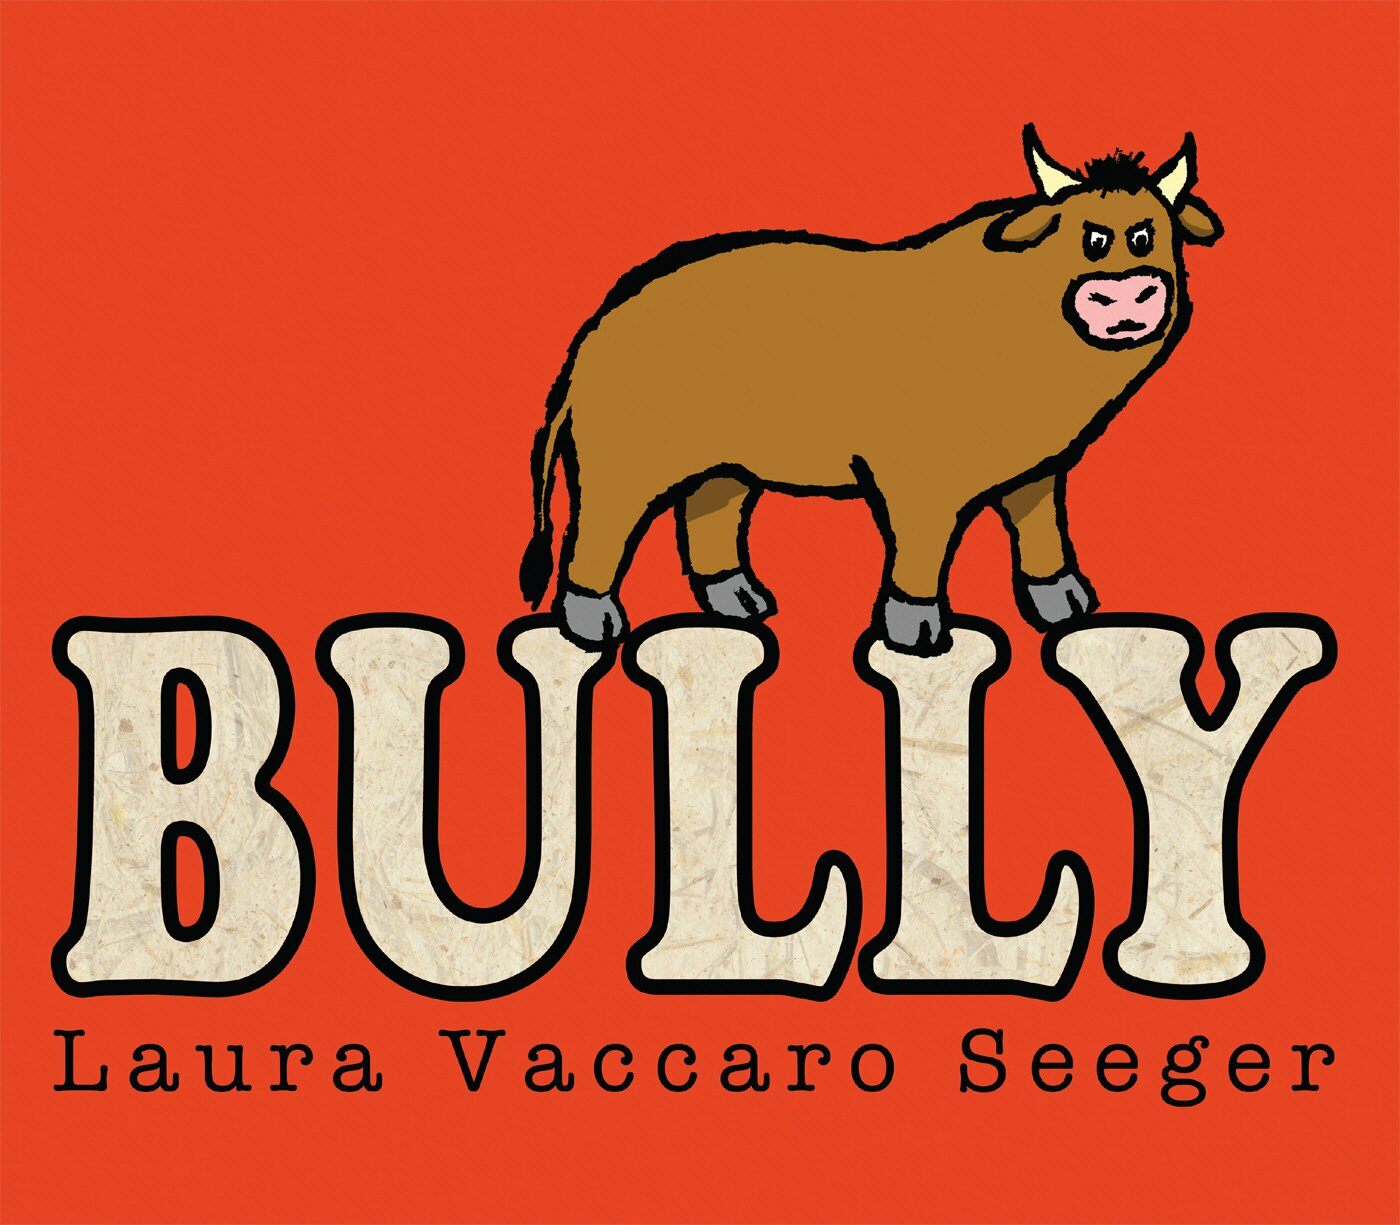 Bully (Hardcover)